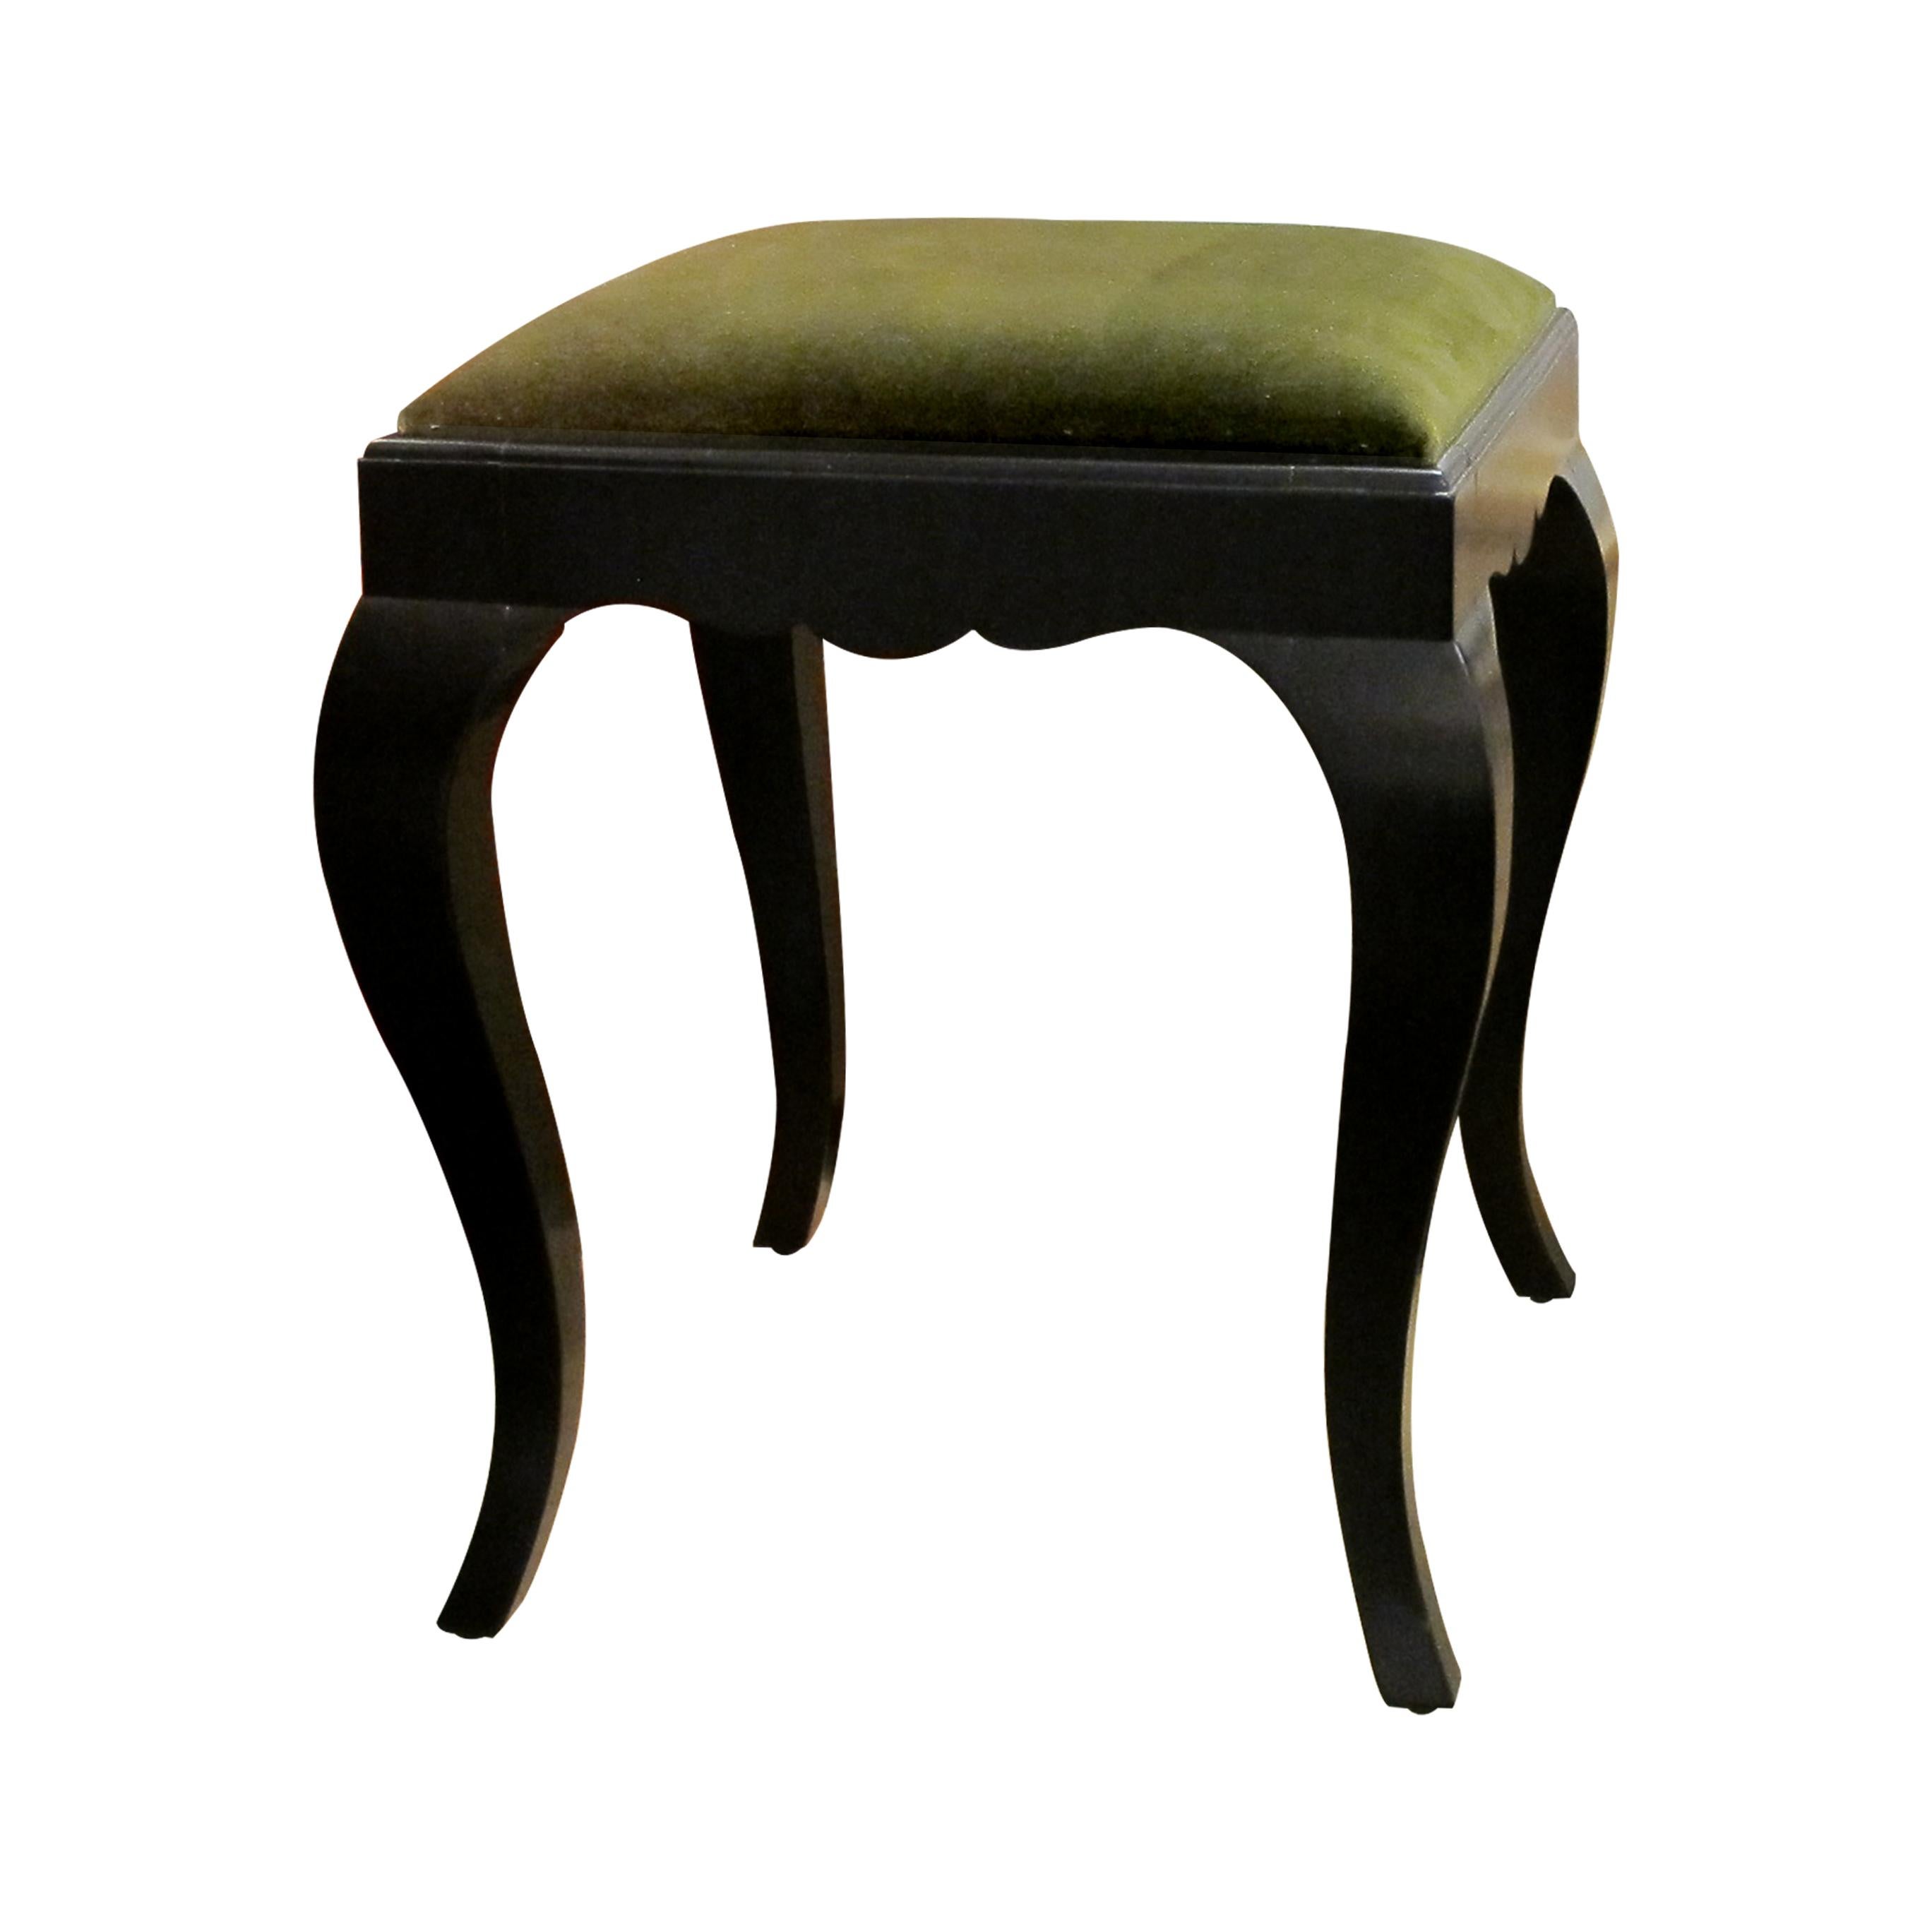 Mid-Century Modern Pair of 1930s Swedish Ebonized Stools Newly Upholstered in Green Velvet Fabric